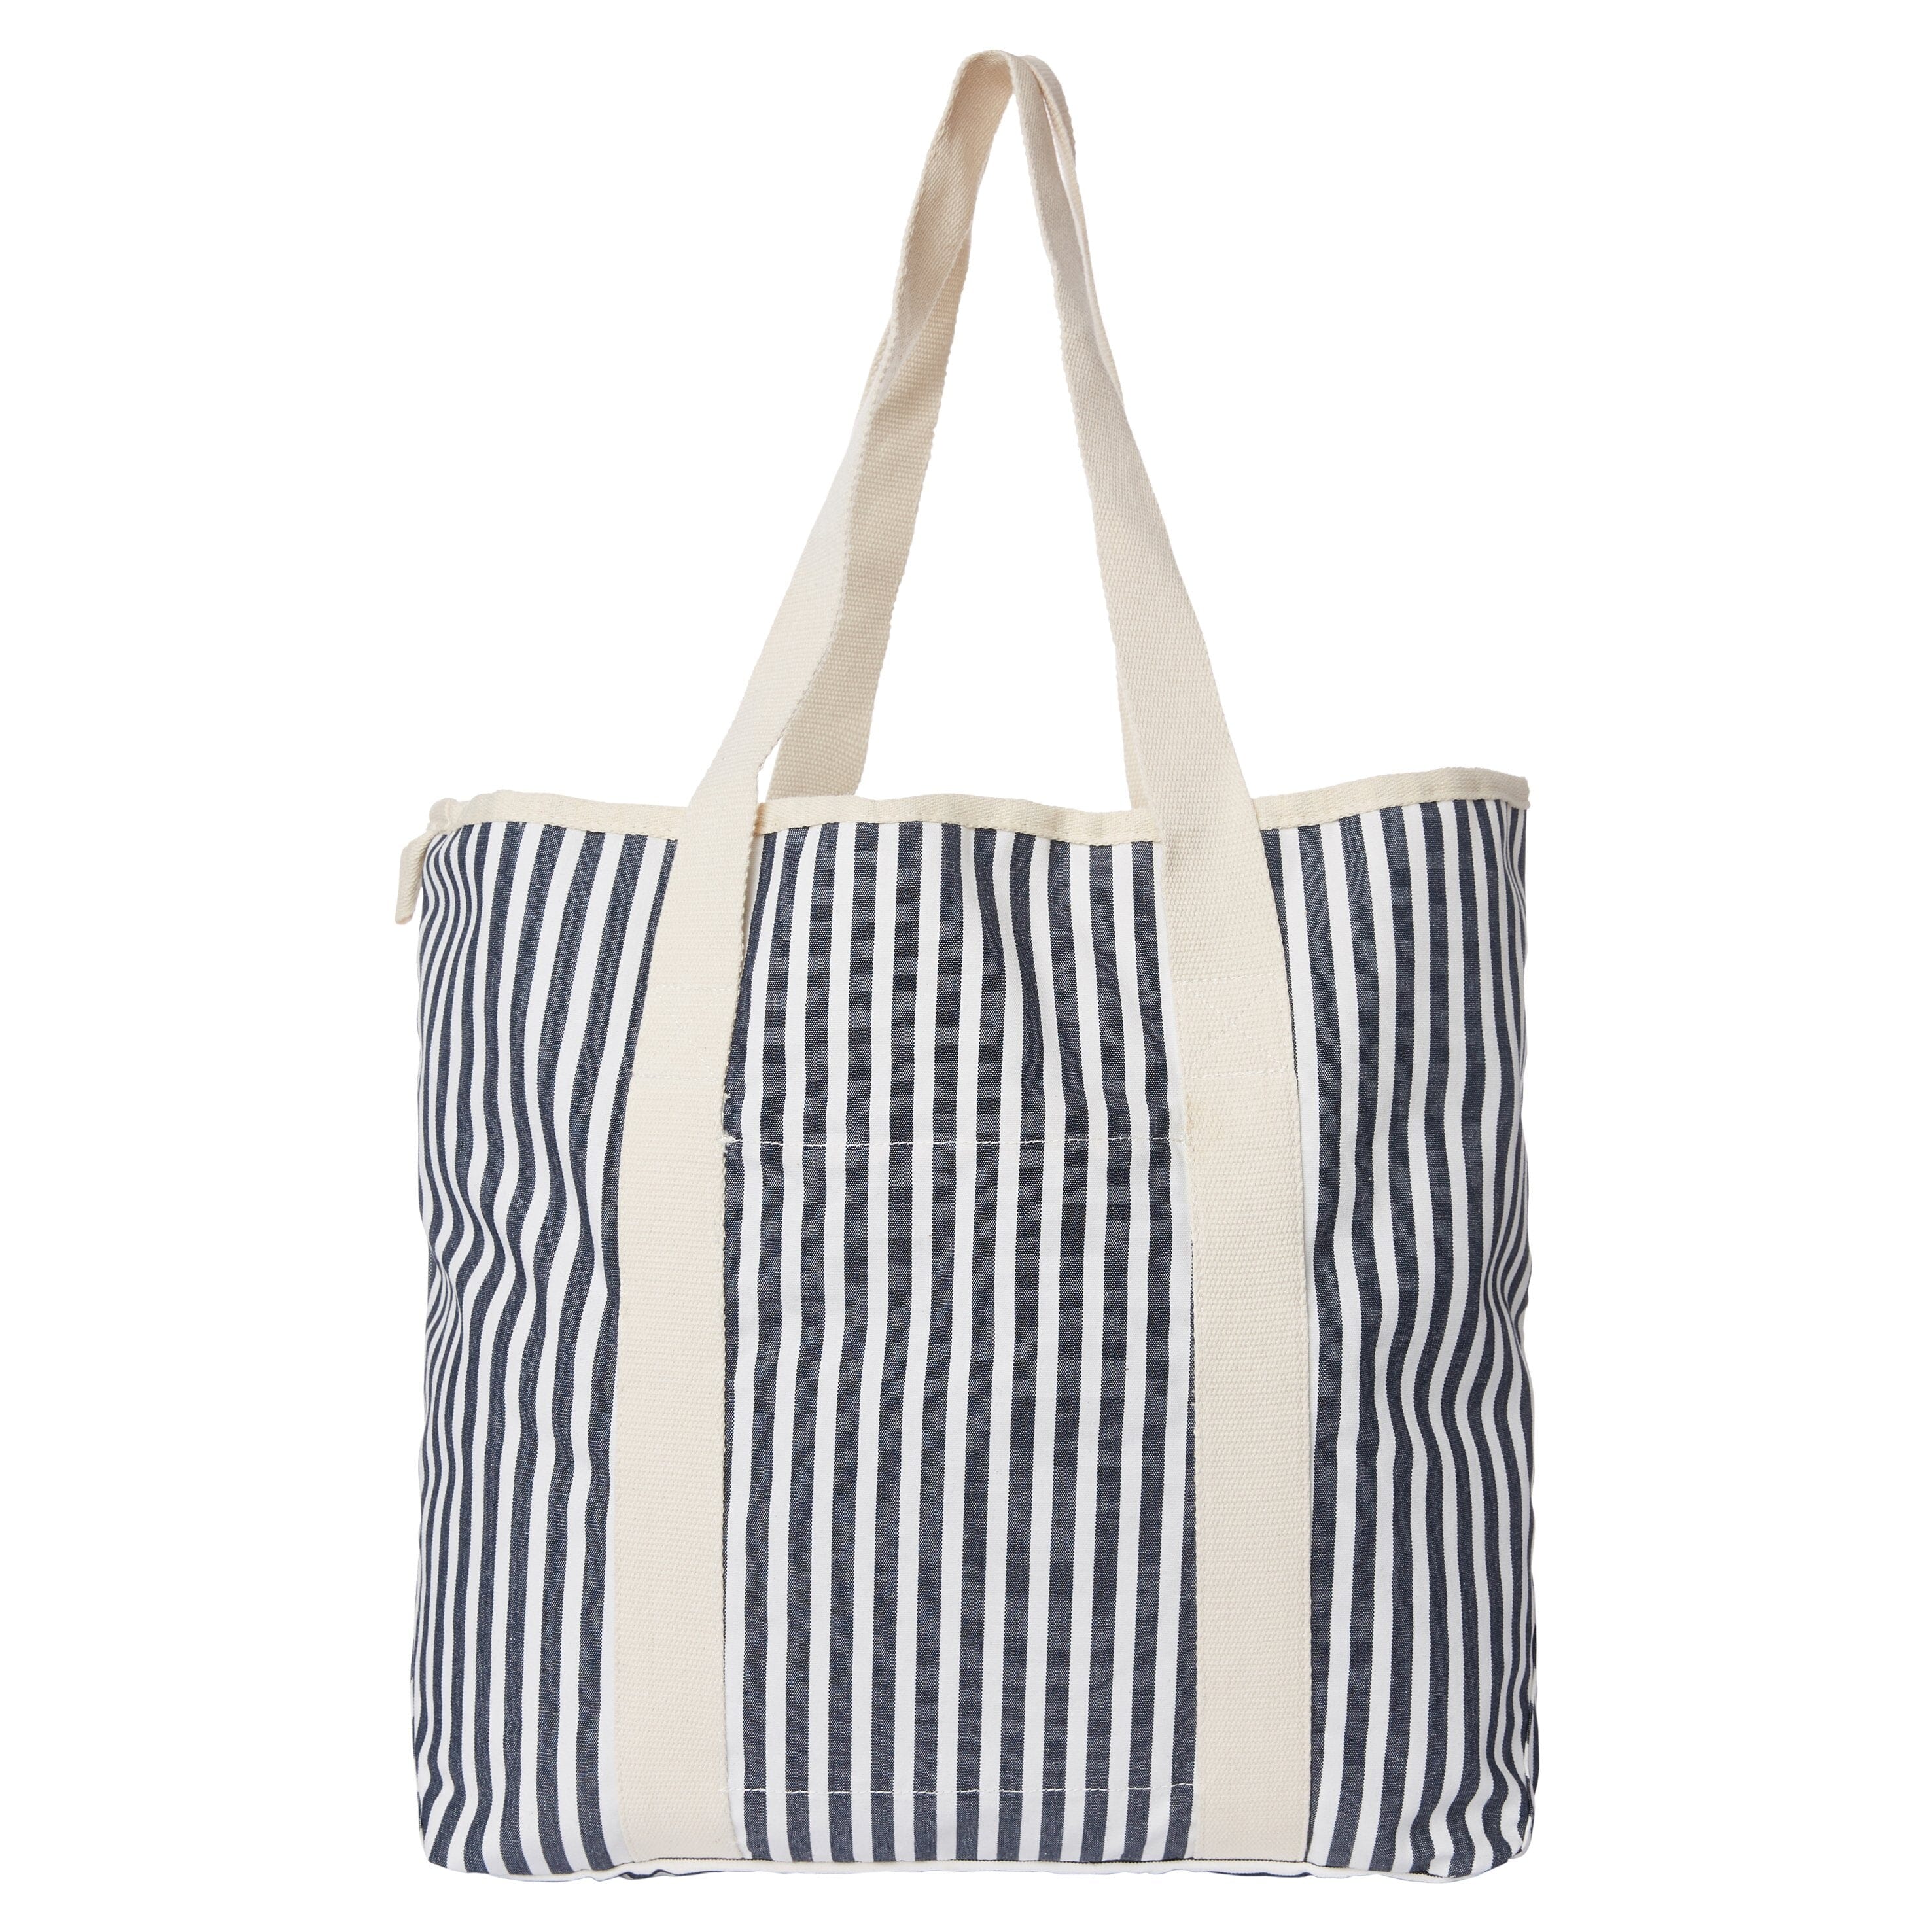 The Beach Bag - Lauren's Navy Stripe Beach Bag Business & Pleasure Co 